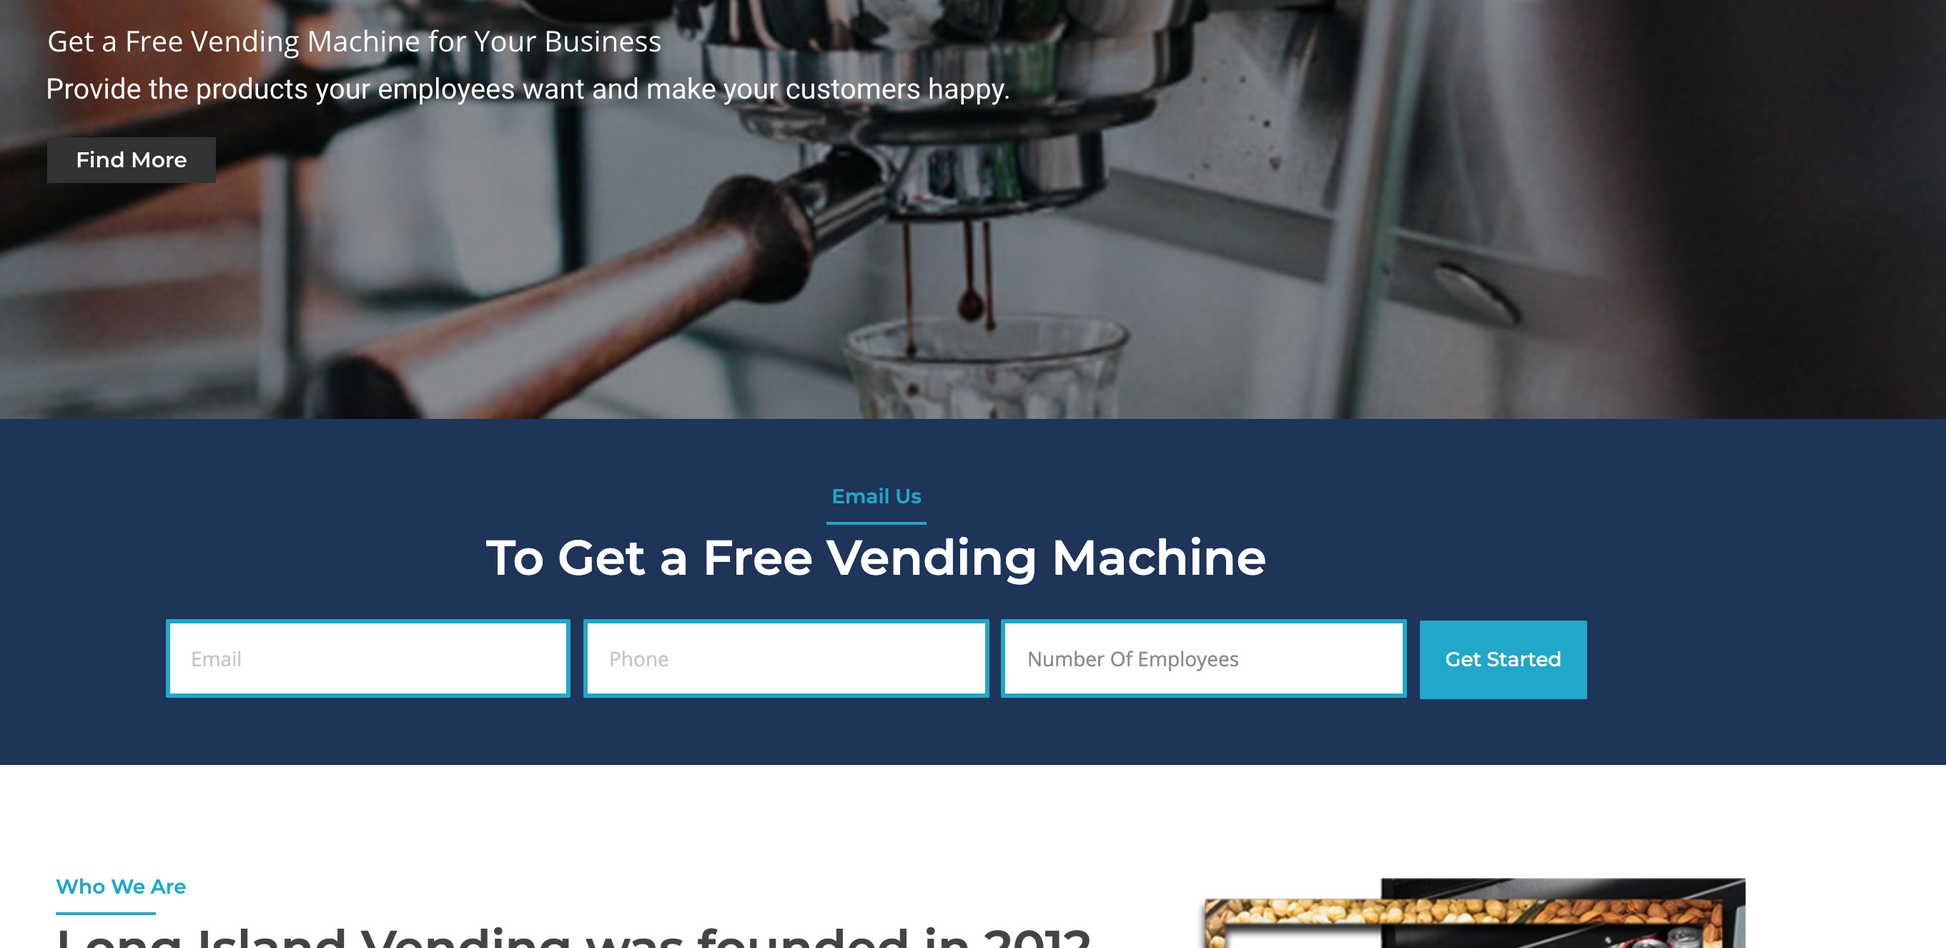 Vending Machine Business Custom Website Creation +  Website Hosting + Free Domain + Free Logo! - Vending Business Solutions